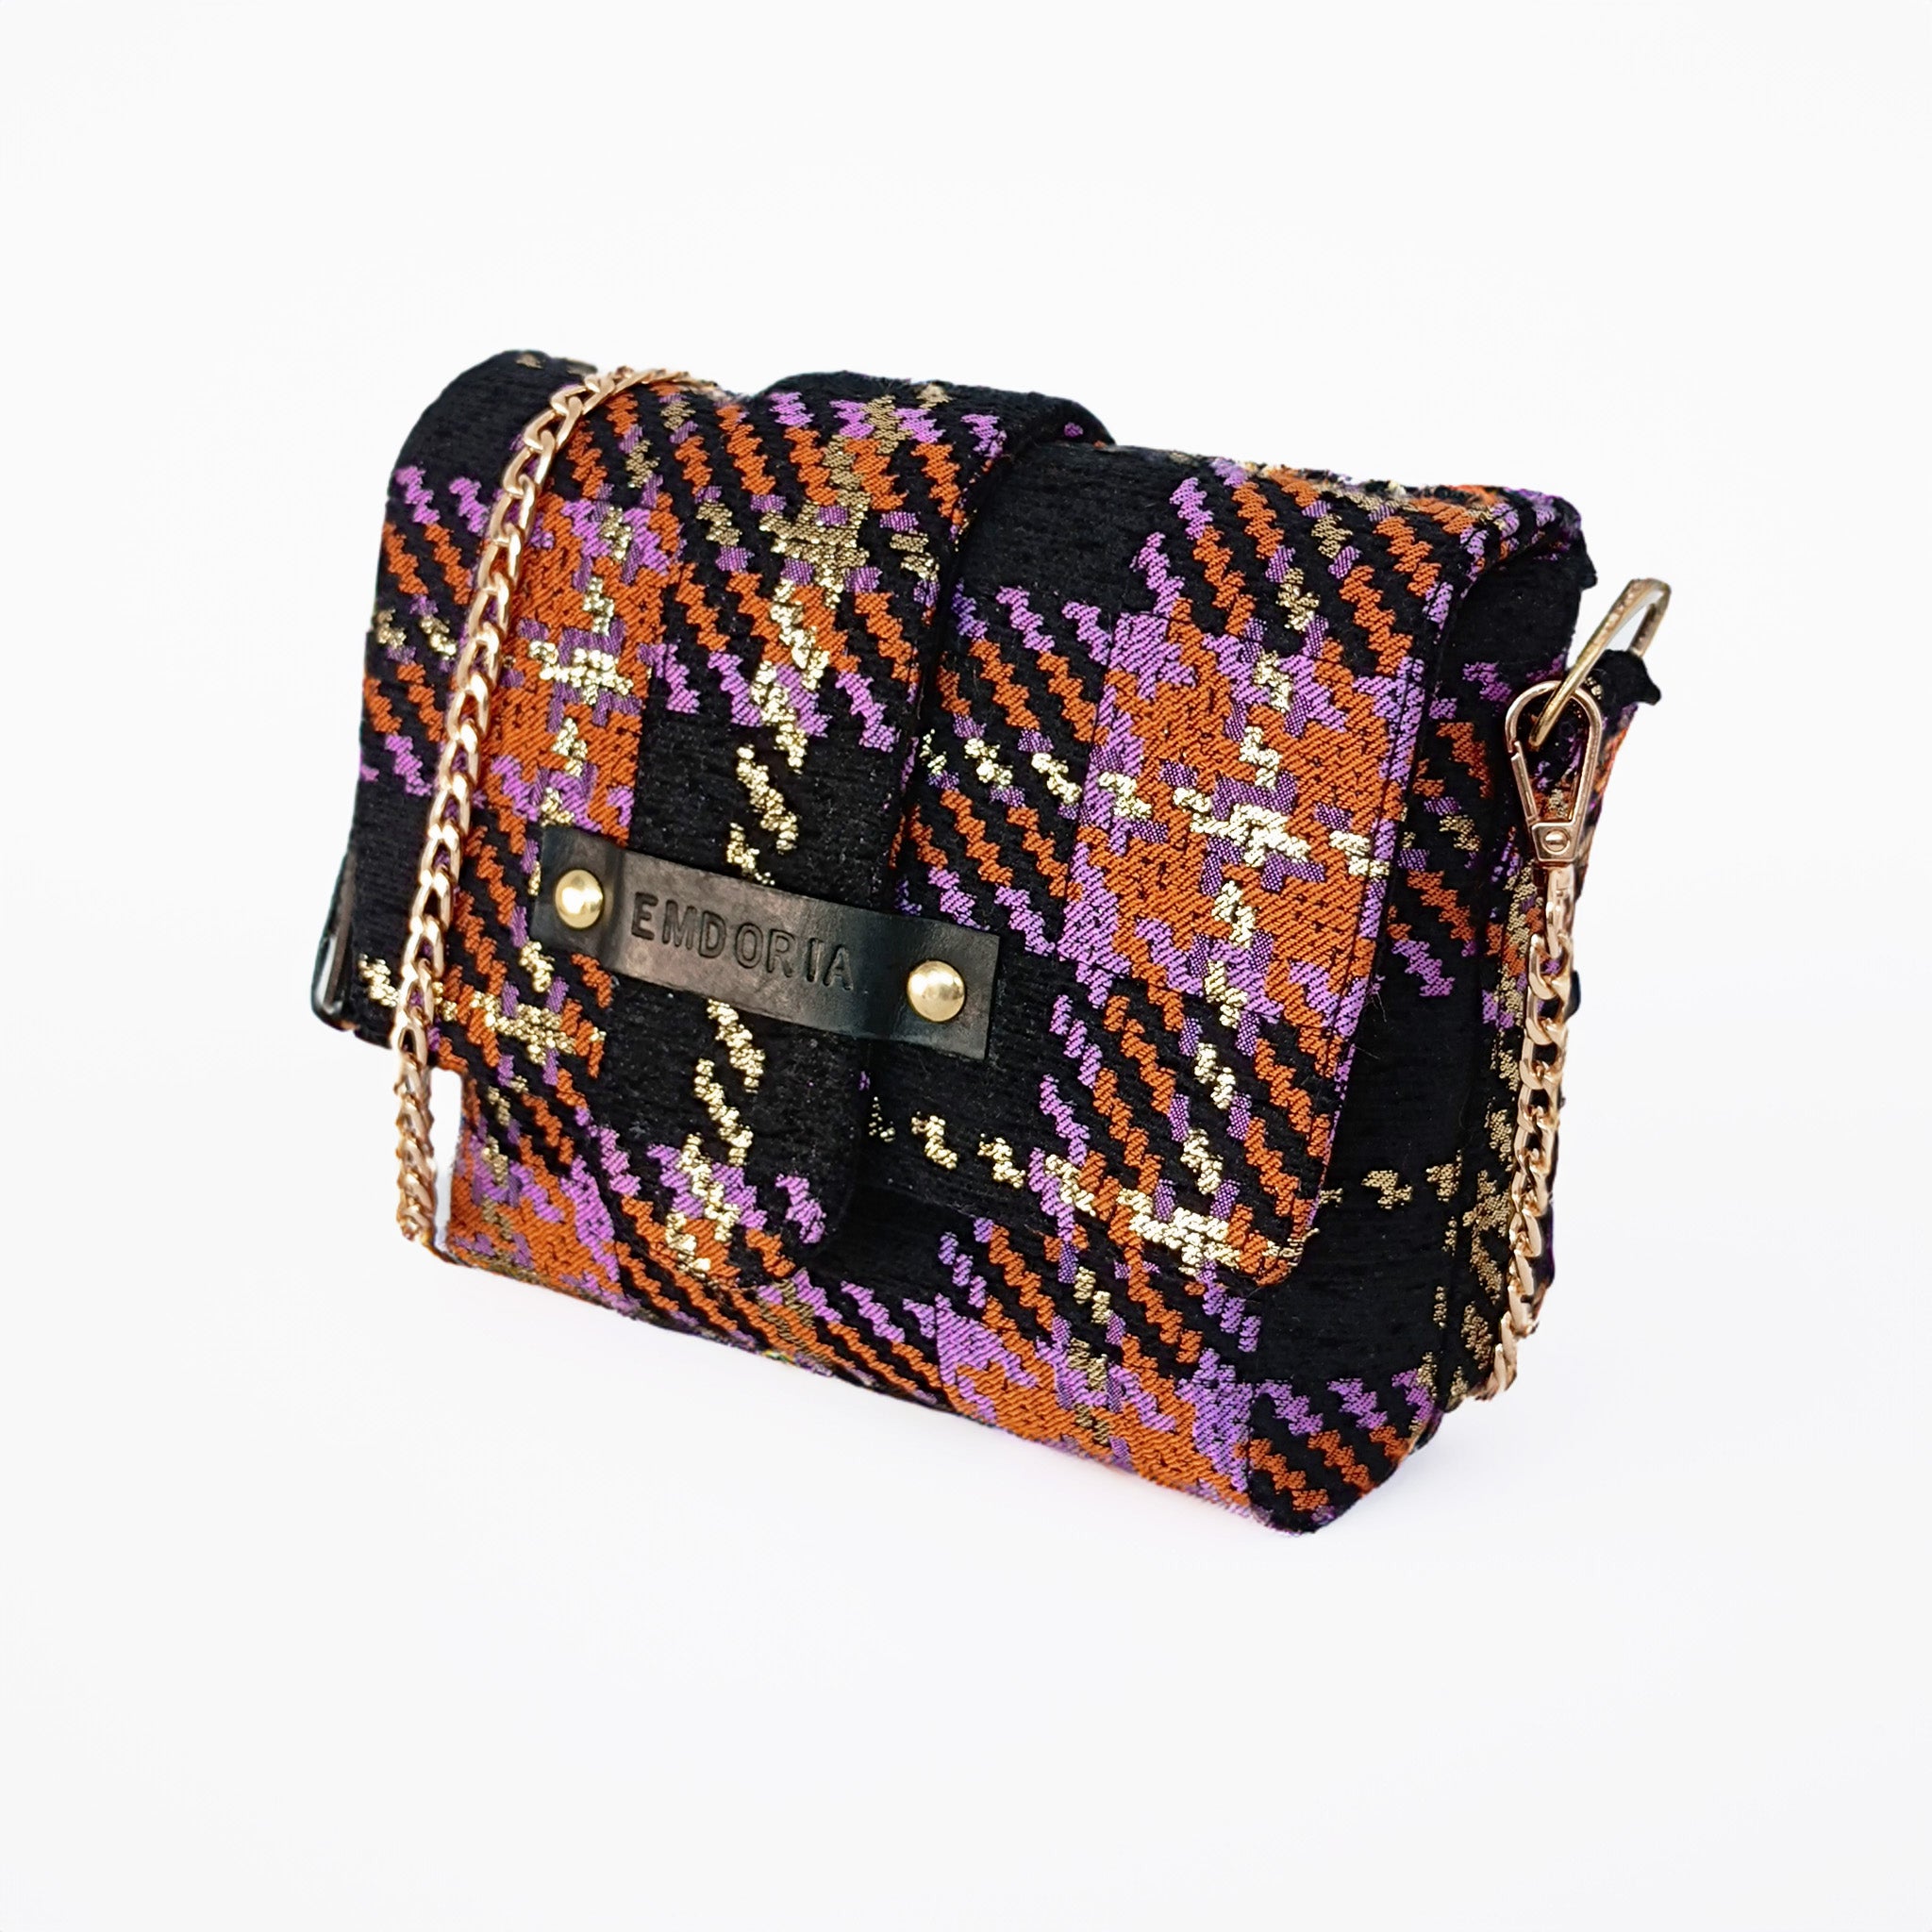 Mini Sac bandoulière en tissu tartan écossais-Sacs à main- bandouliere-cross bag hand bag-hand cross bag-EMDORIA PARIS